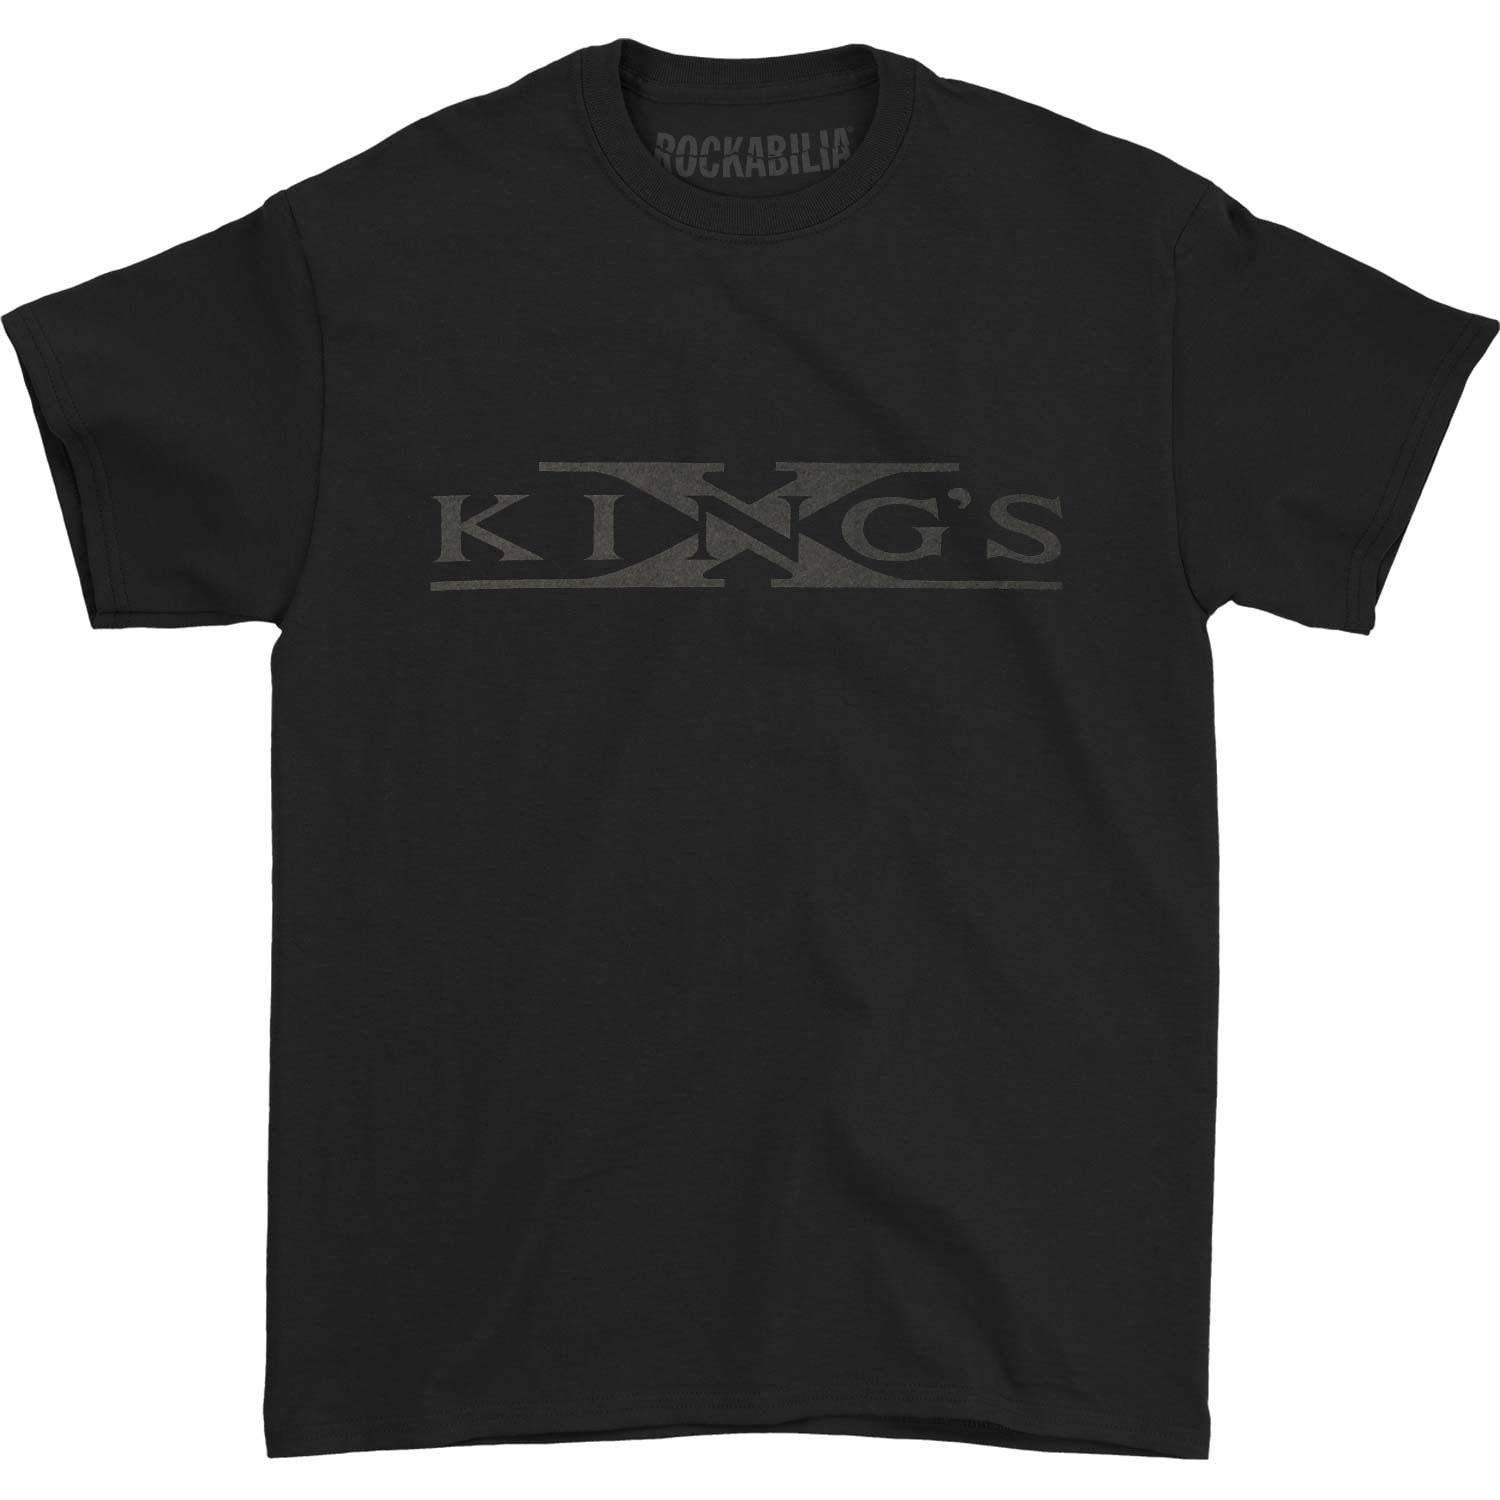 Kings X - Kings X Men's Logo Est 1980 T-shirt Black - Walmart.com ...